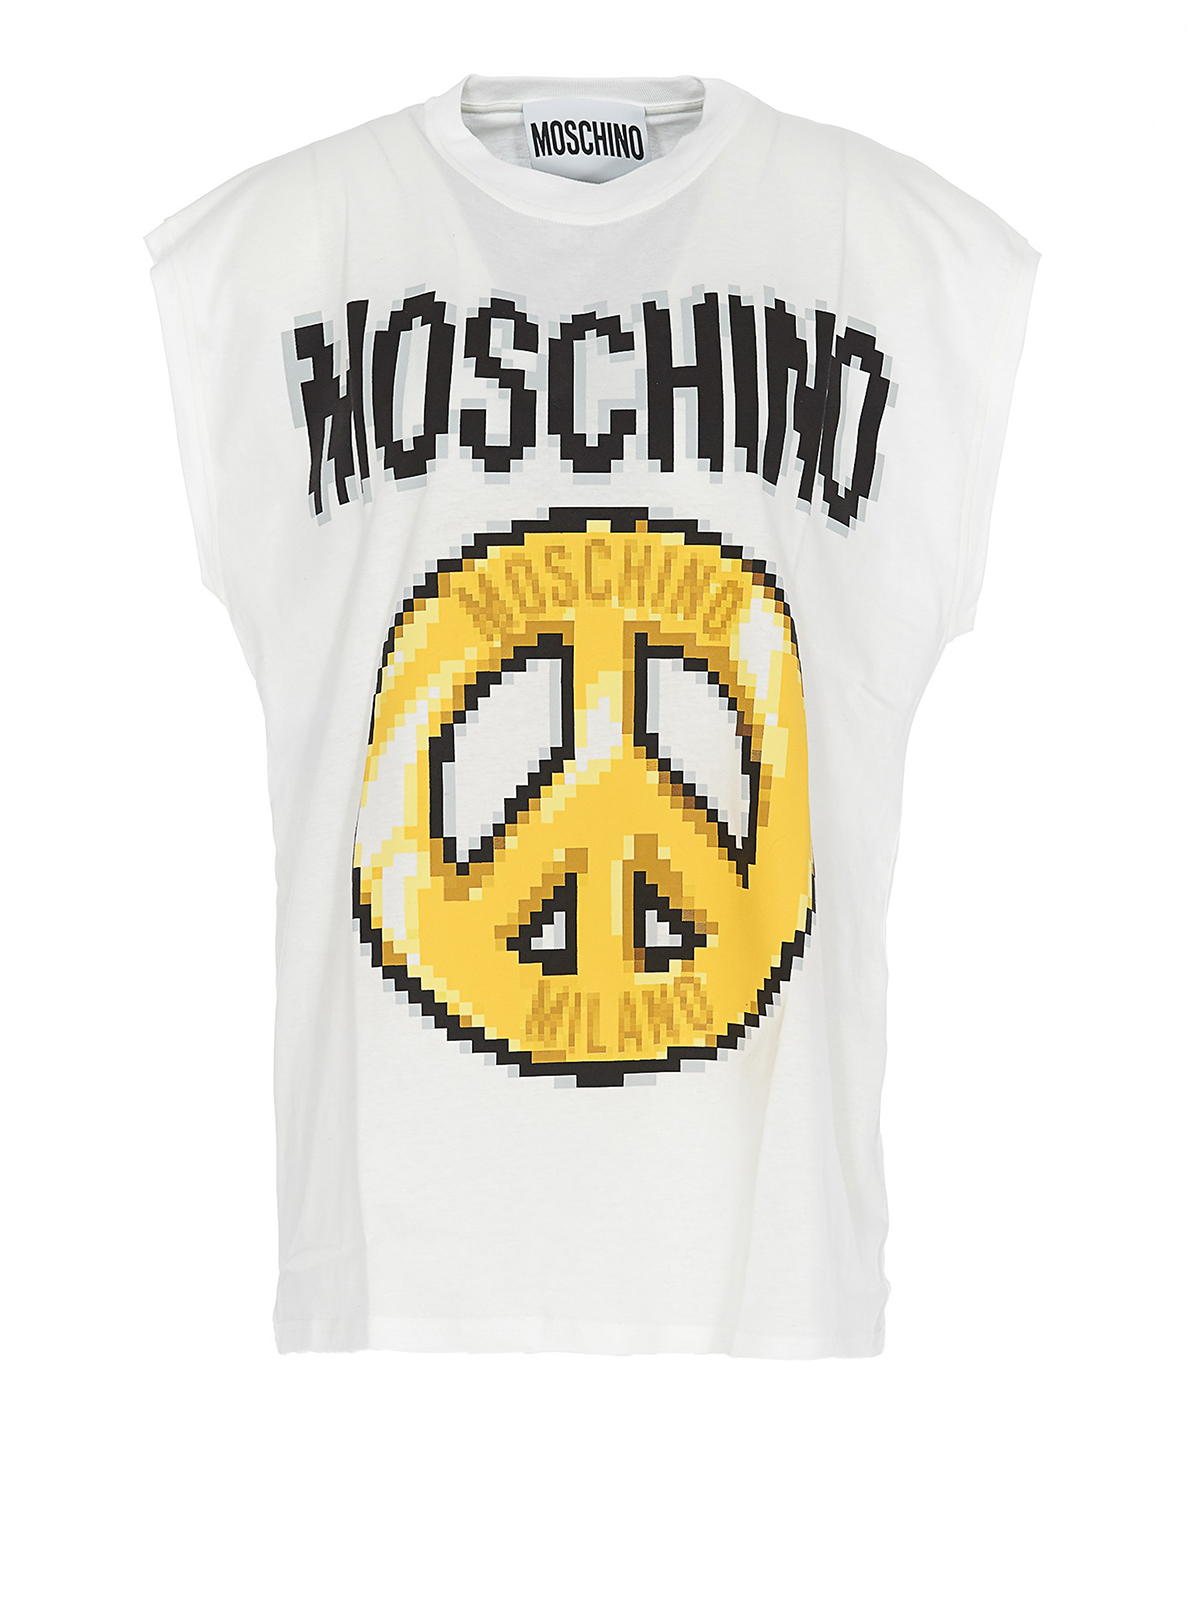 moschino peace shirt